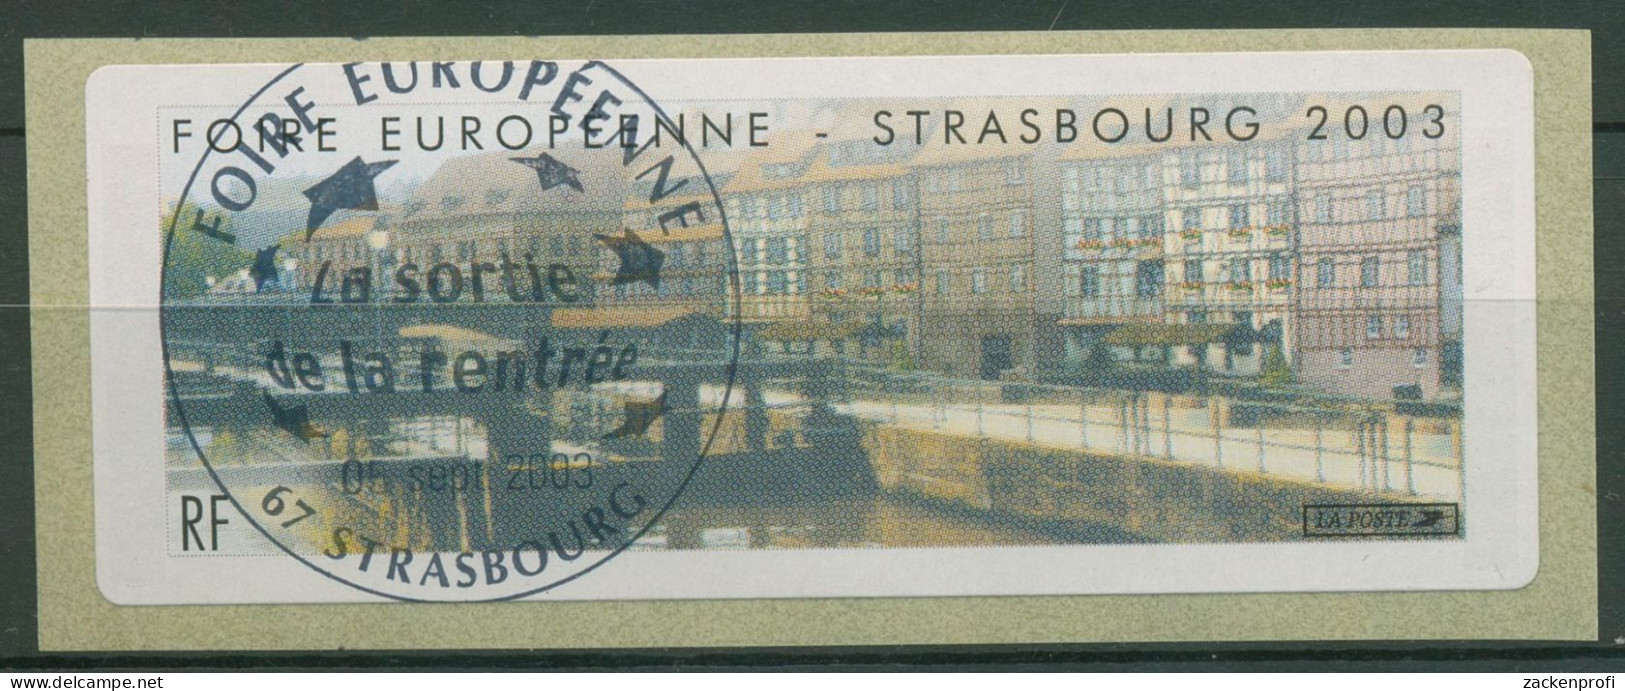 Frankreich 2003 Automatenmarken Europa-Messe Straßburg ATM 30 Gestempelt - 1999-2009 Illustrated Franking Labels